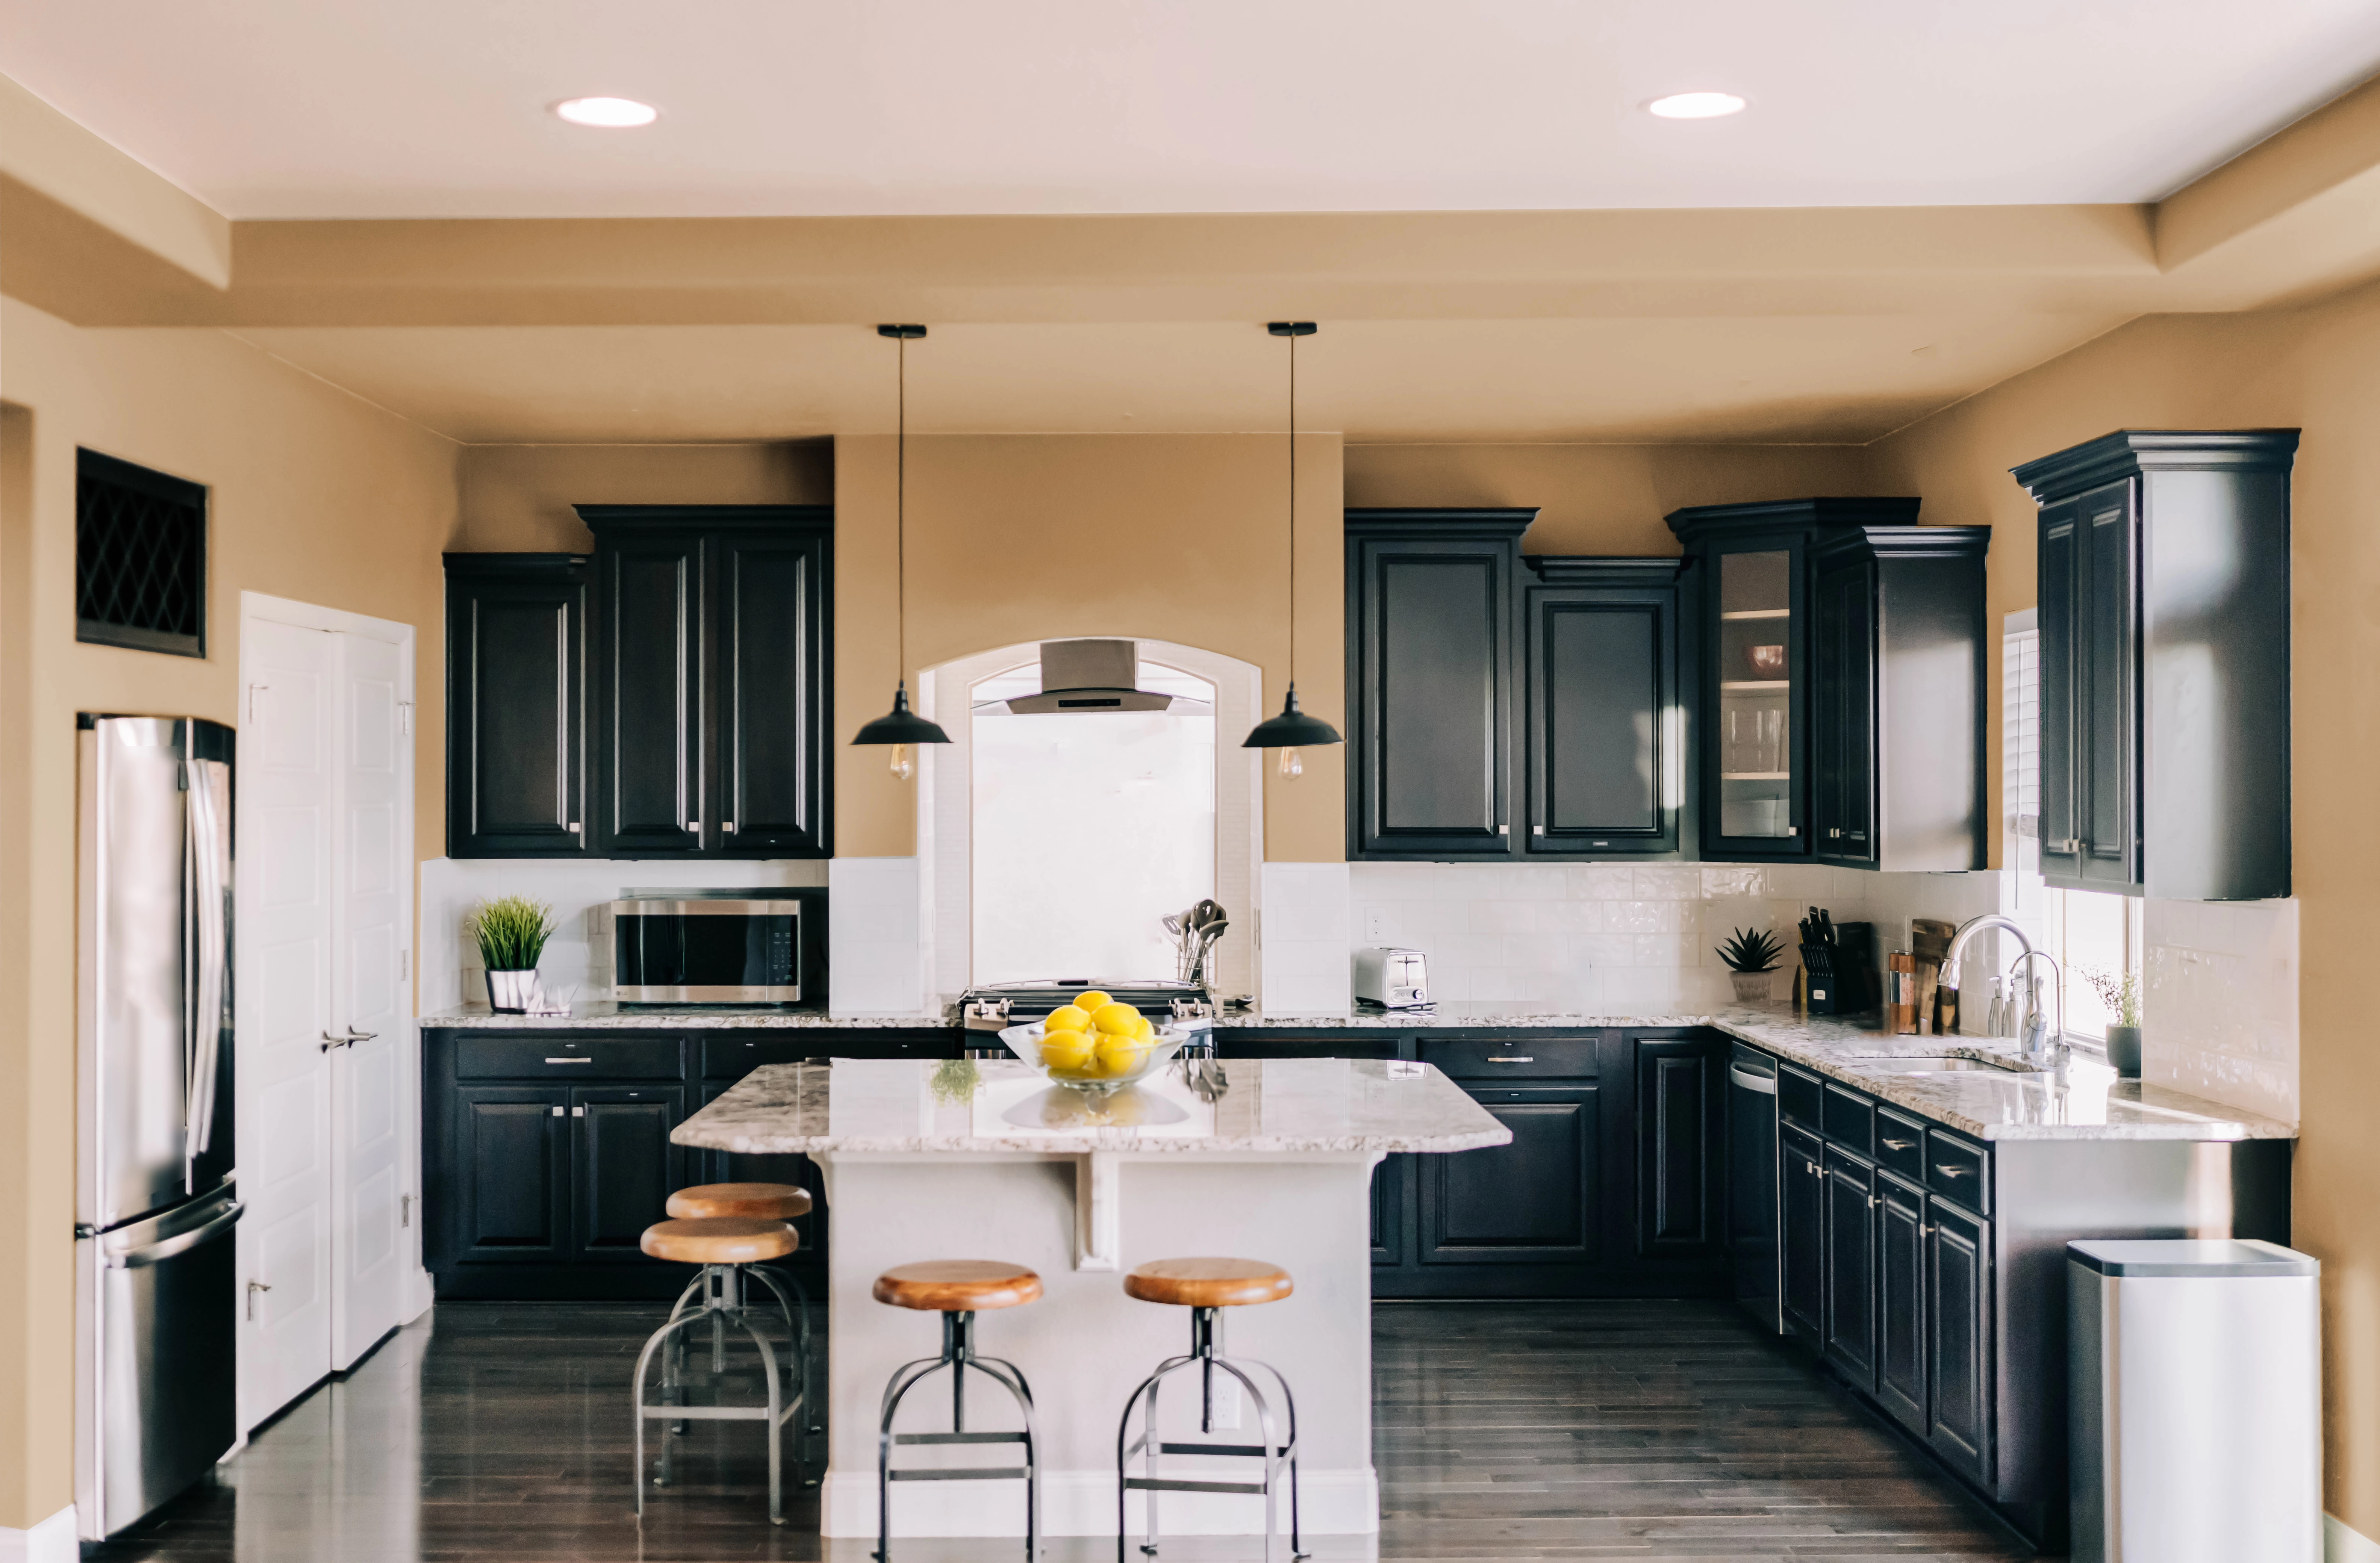 Modern kitchen with tan walls, black cabinets, white backsplash, island, doors, marble countertops.